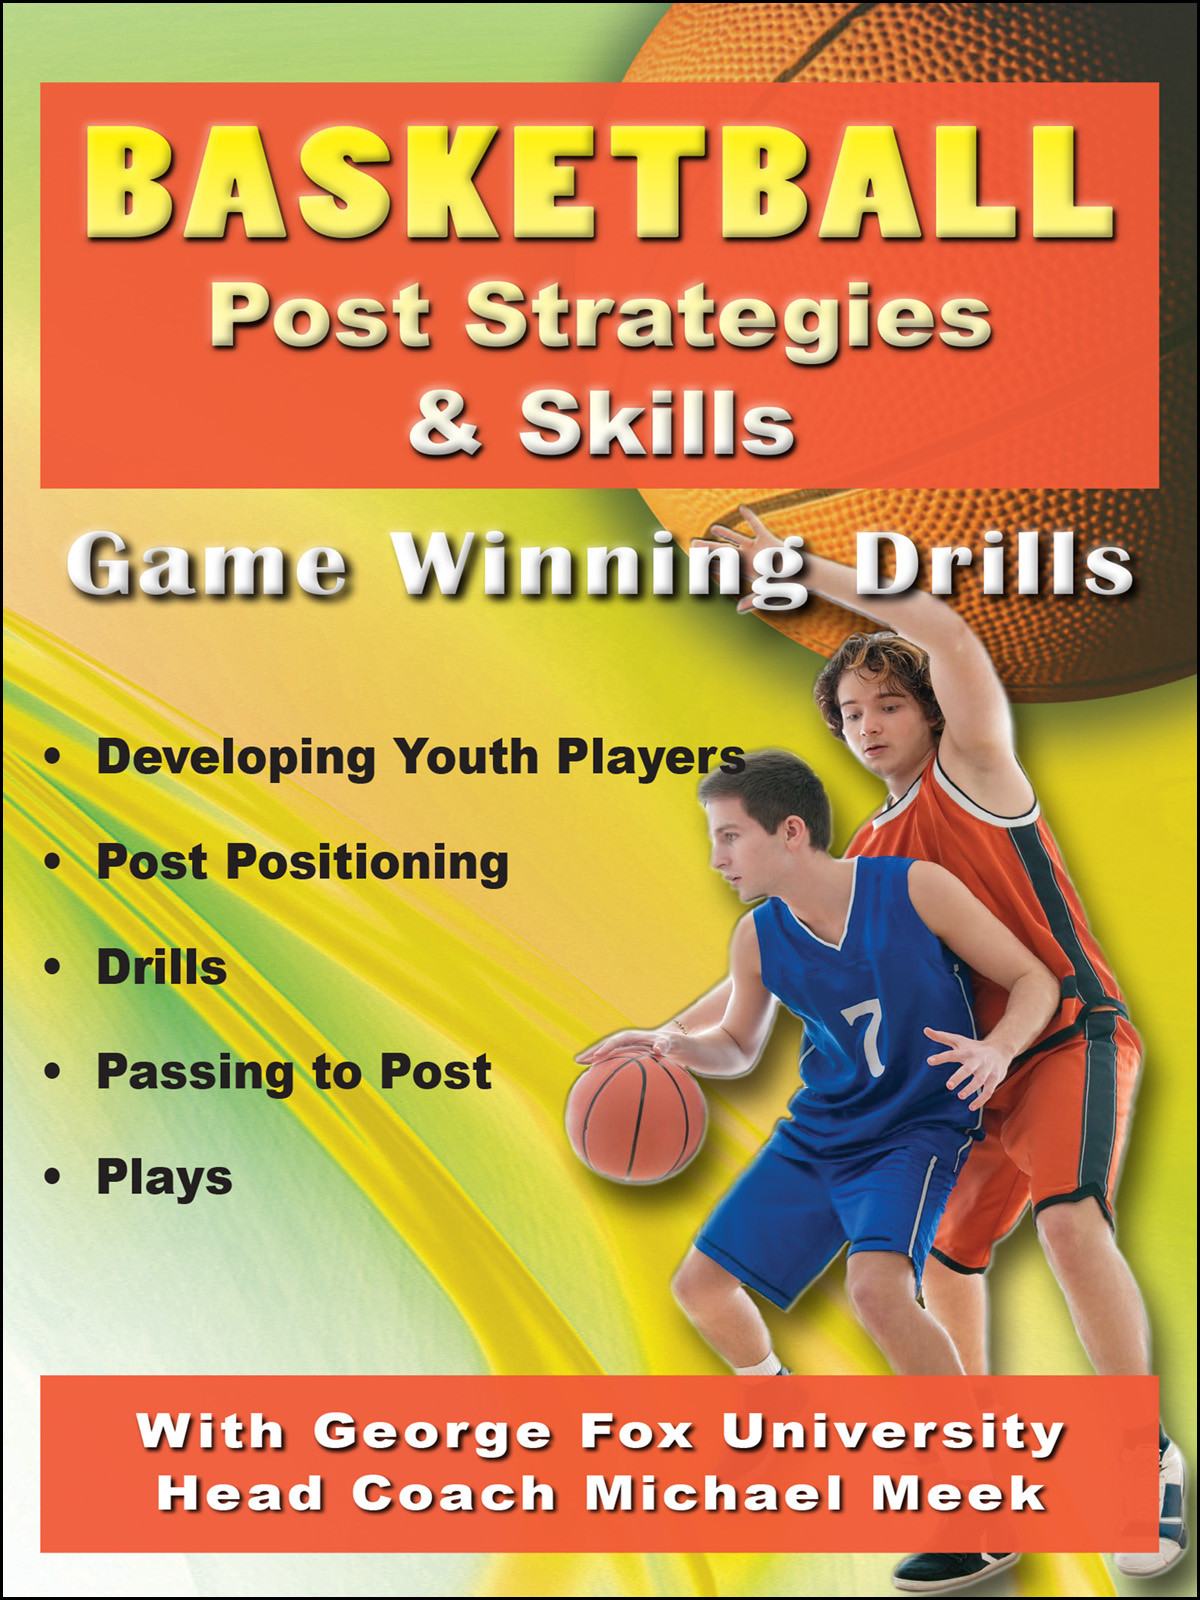 K4207 - Basketball Post Strategies & Skills